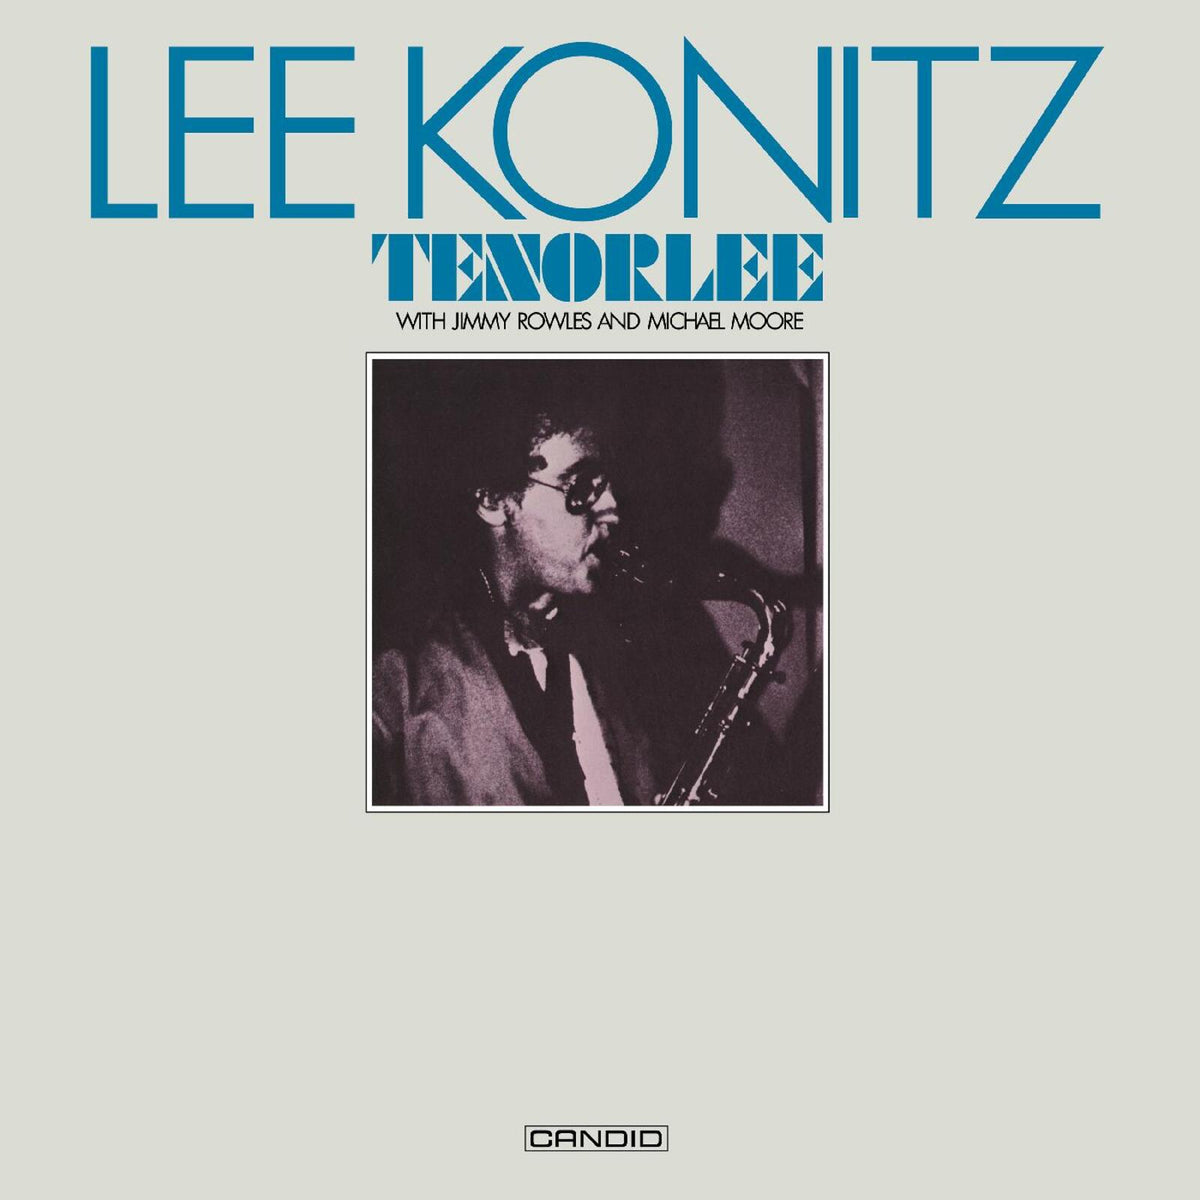 Lee Konitz - Tenorlee - LPCND33221